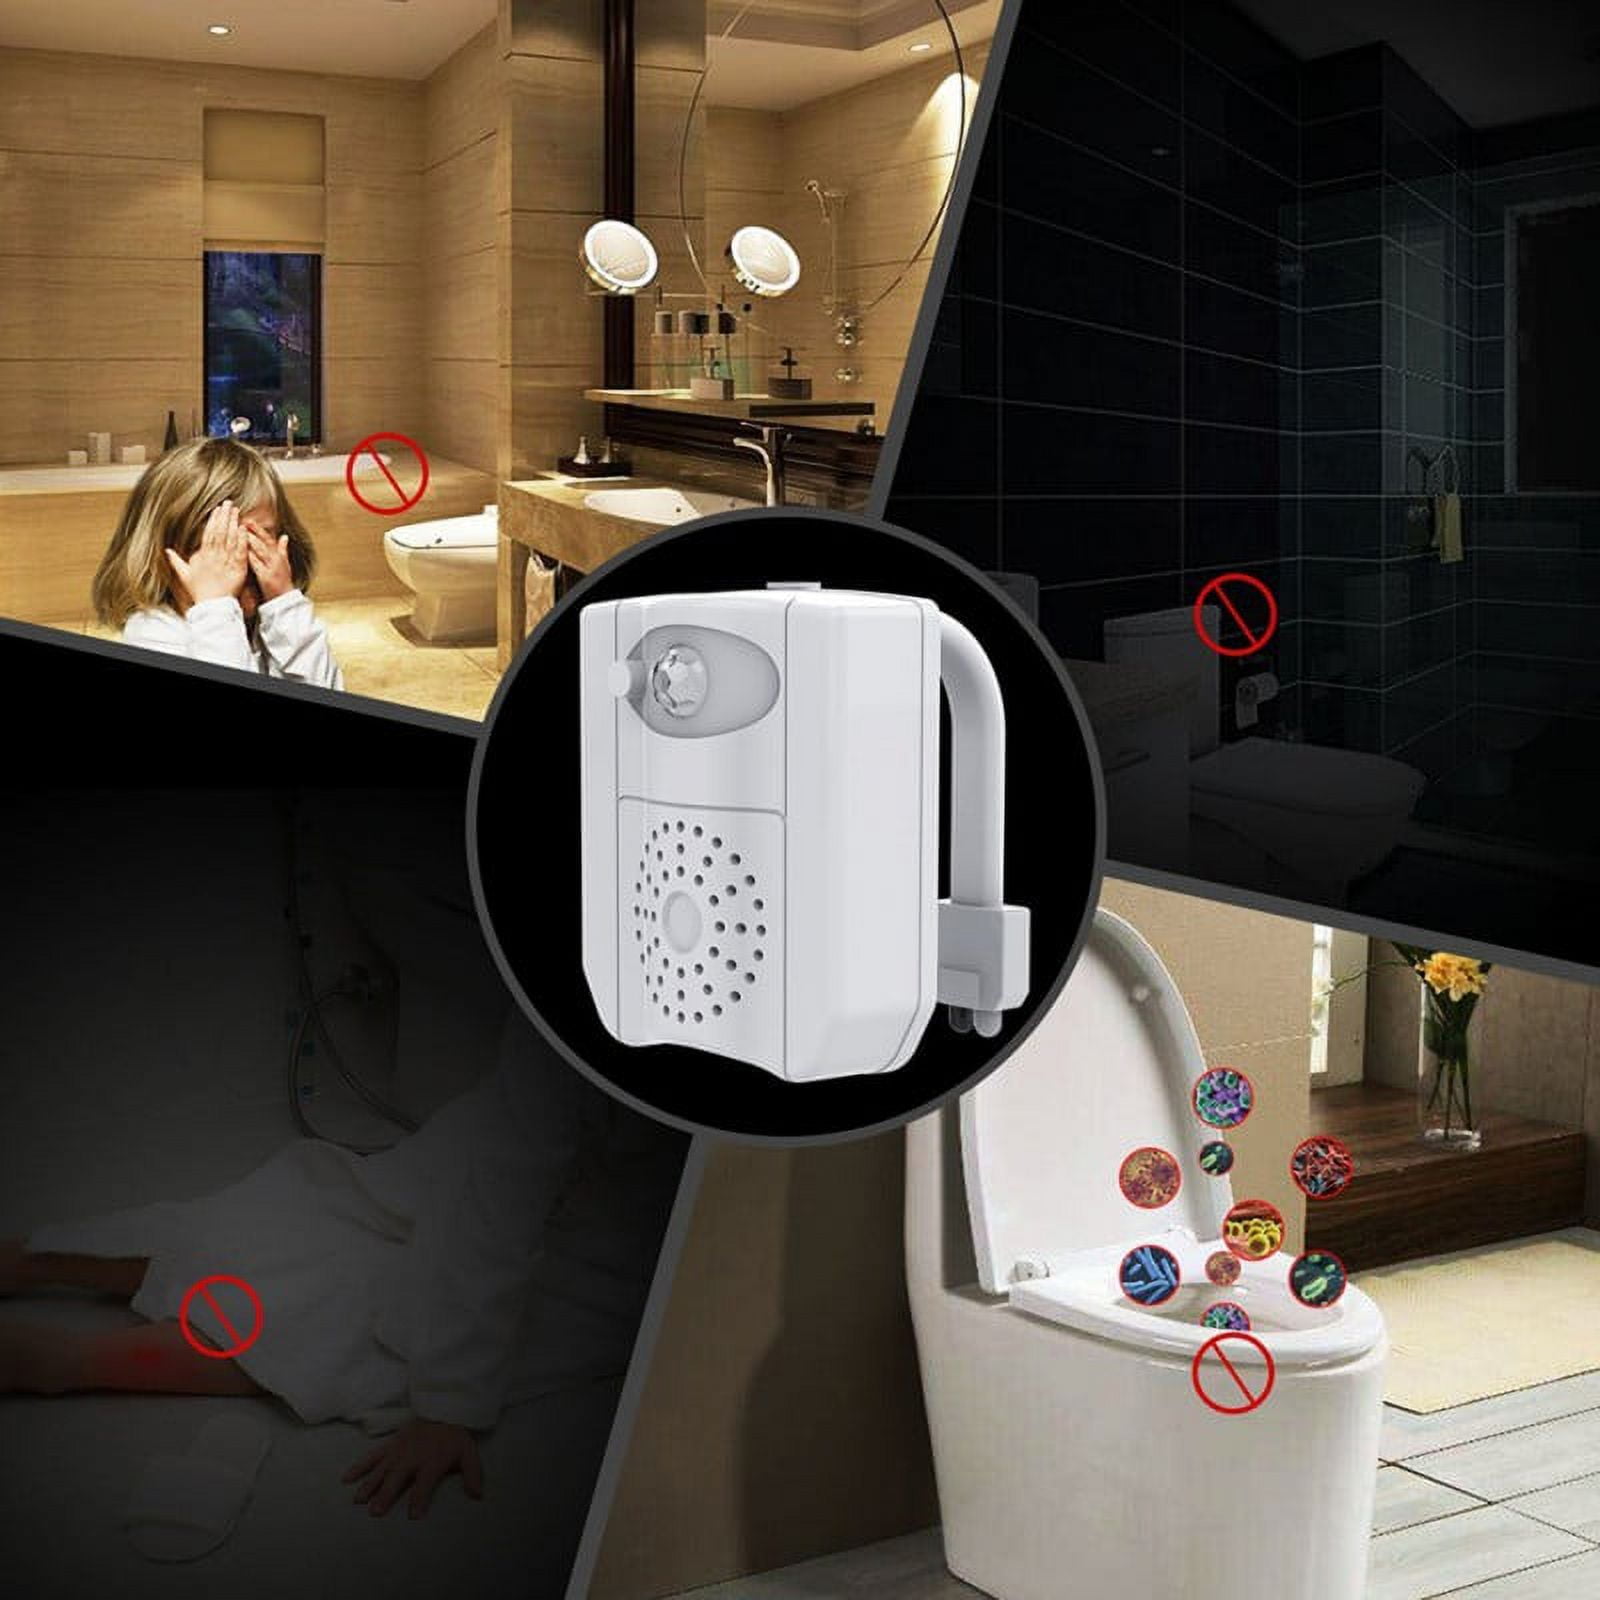 VINTAR 16-Color Motion Sensor LED Toilet Night Light,Toilet Bowl